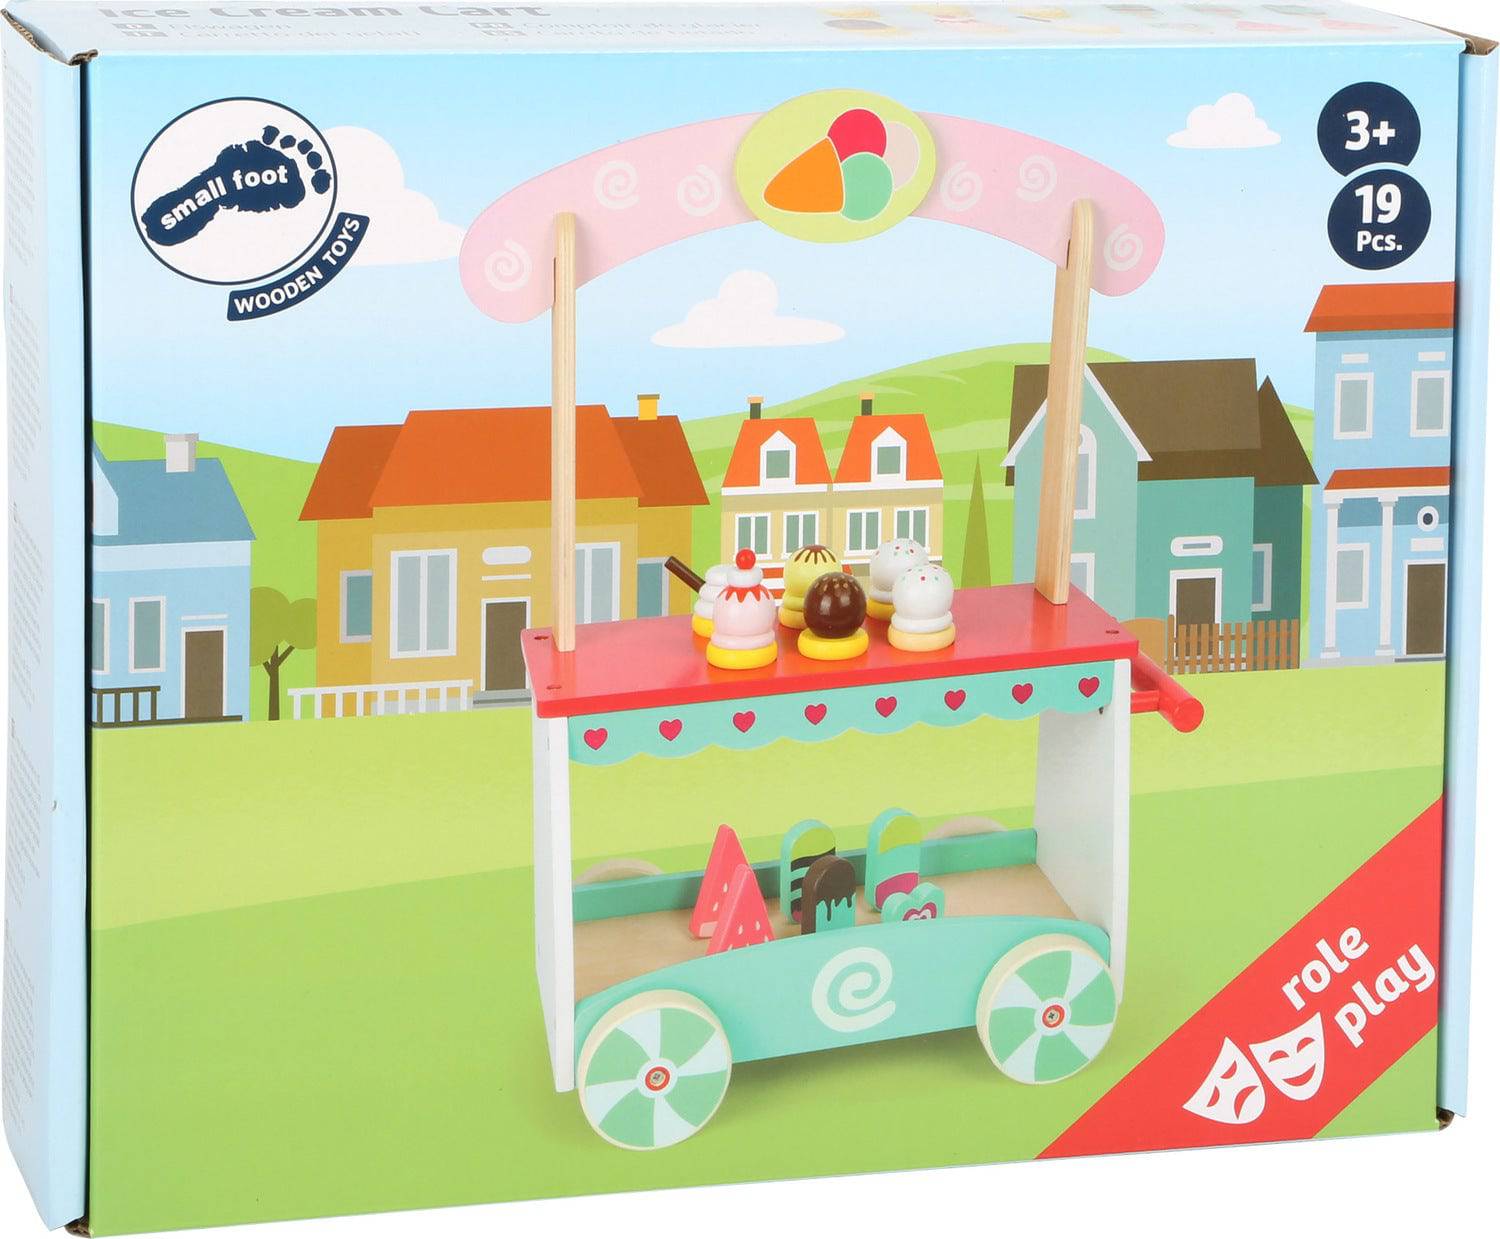 Ice Cream Cart Playset - A Child's Delight